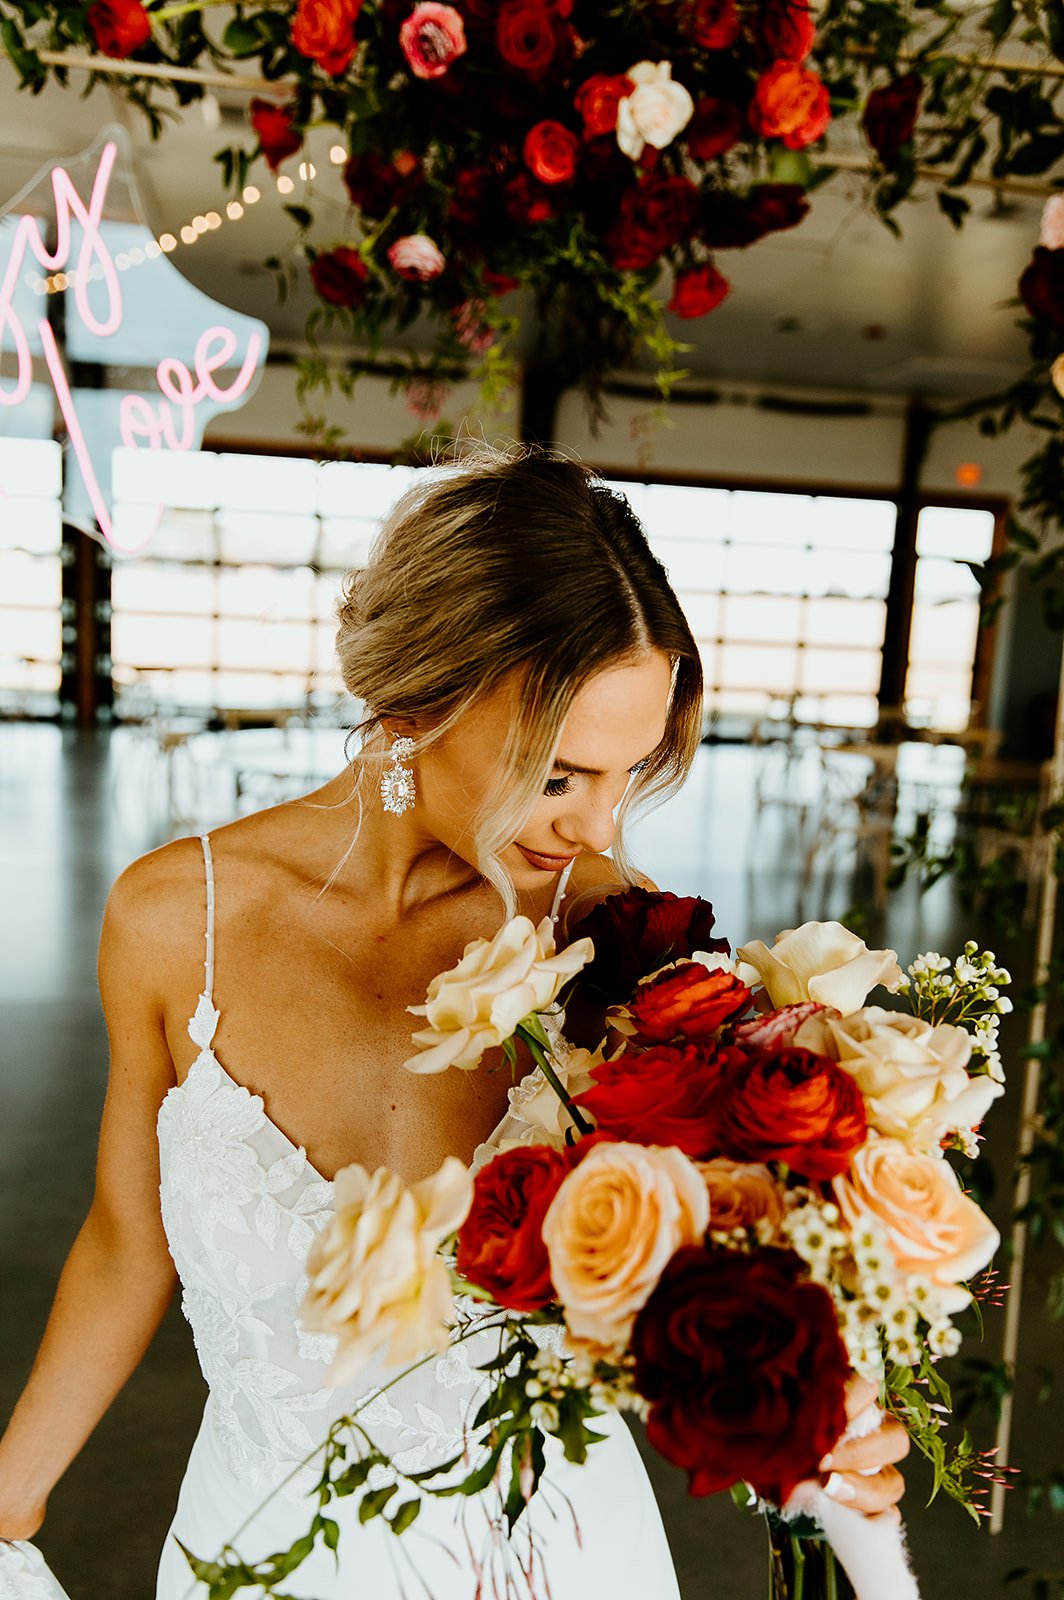 Alean-Leena-Garden-Rose-Wedding-Dress-Nicole-Catherine-Photography-12.jpg